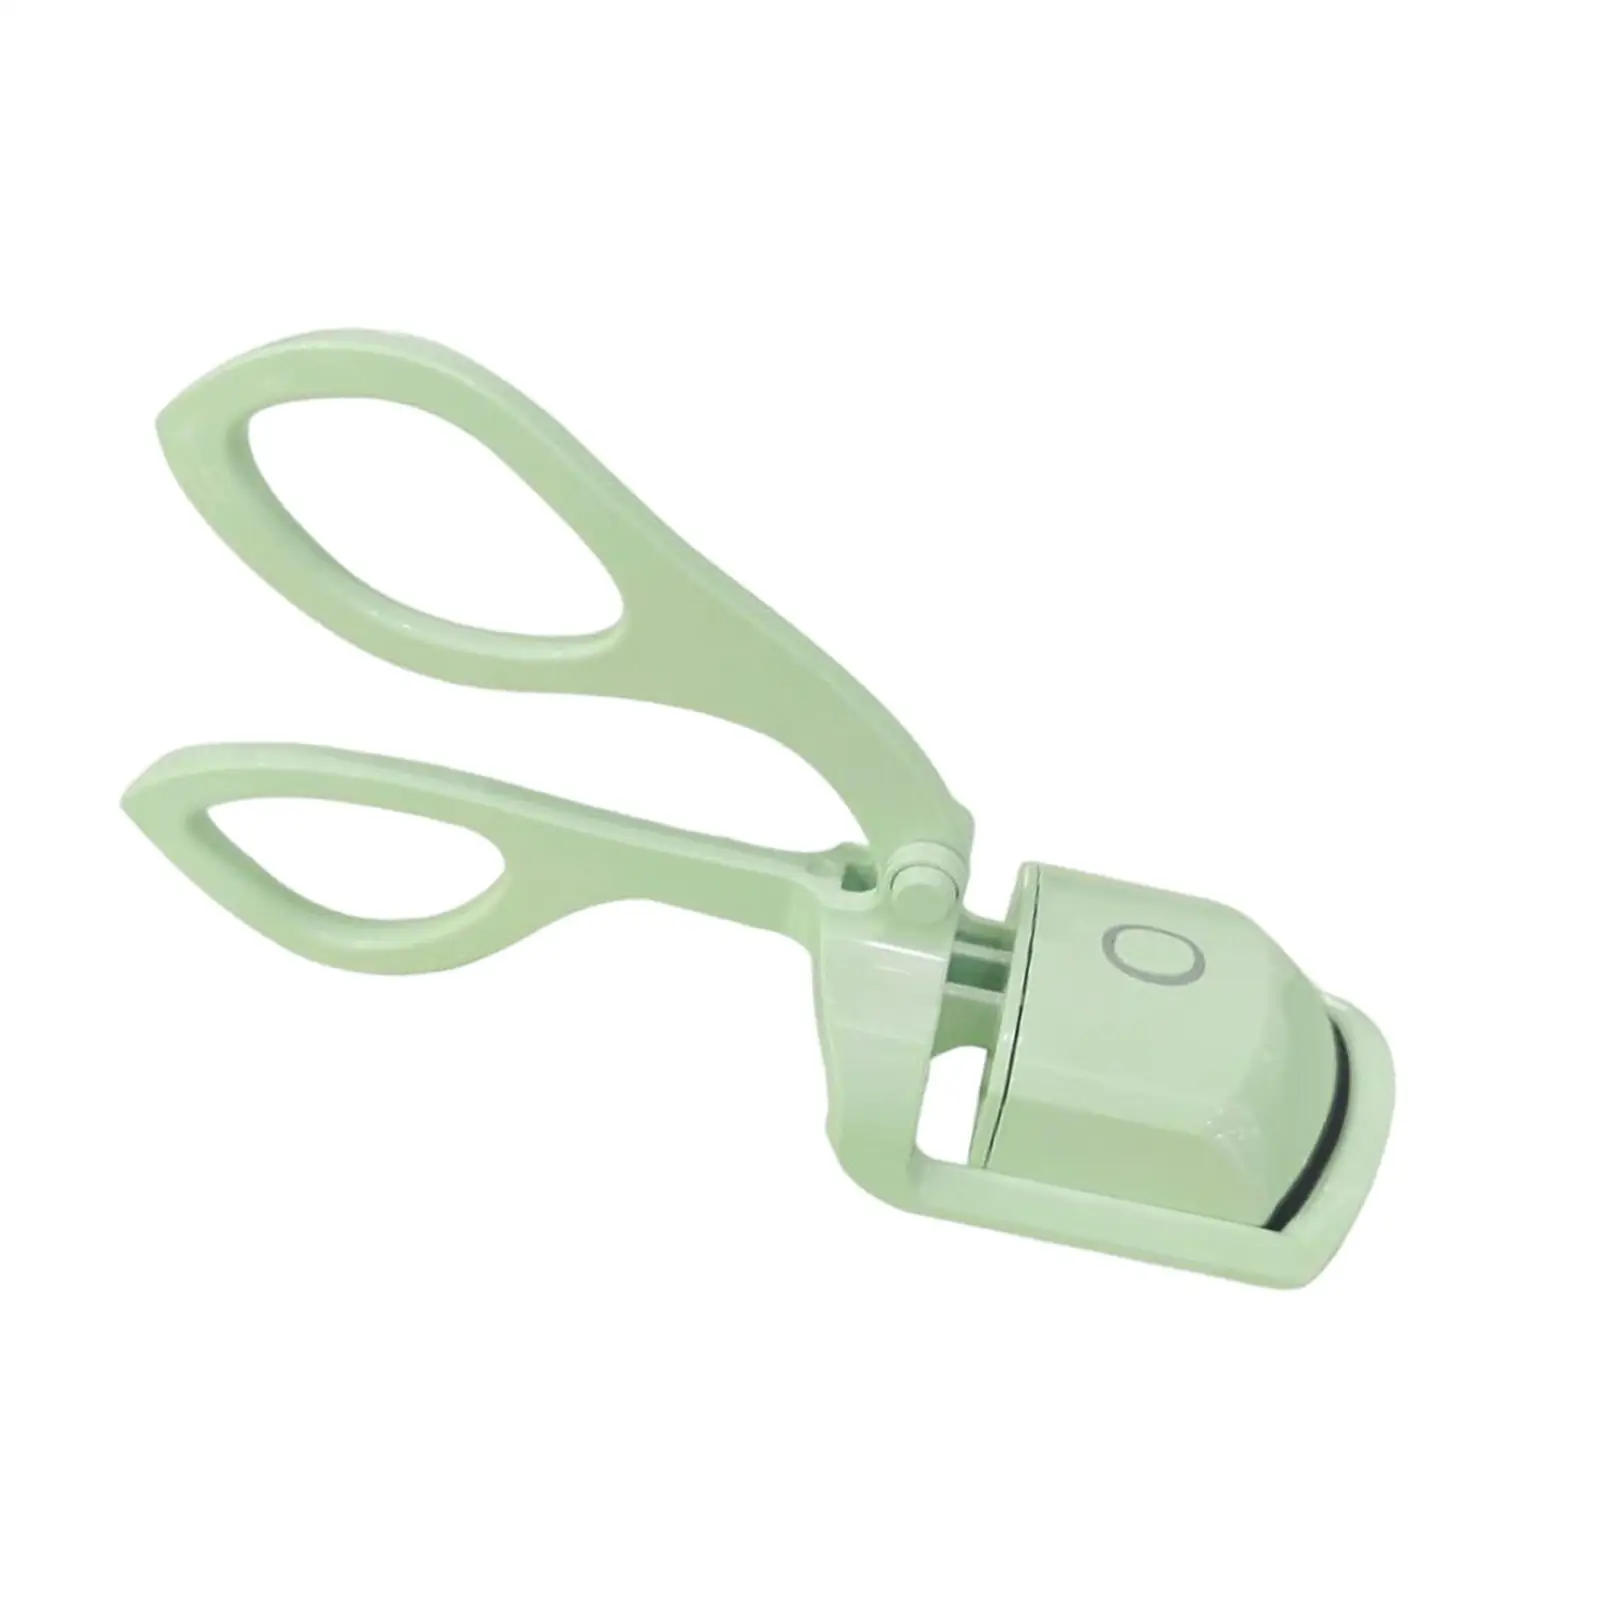 Portable Heated Eyelash Curler Persistent Curl Long & Voluminously Curled eyelash in Seconds USB EyeLash Curling Clip